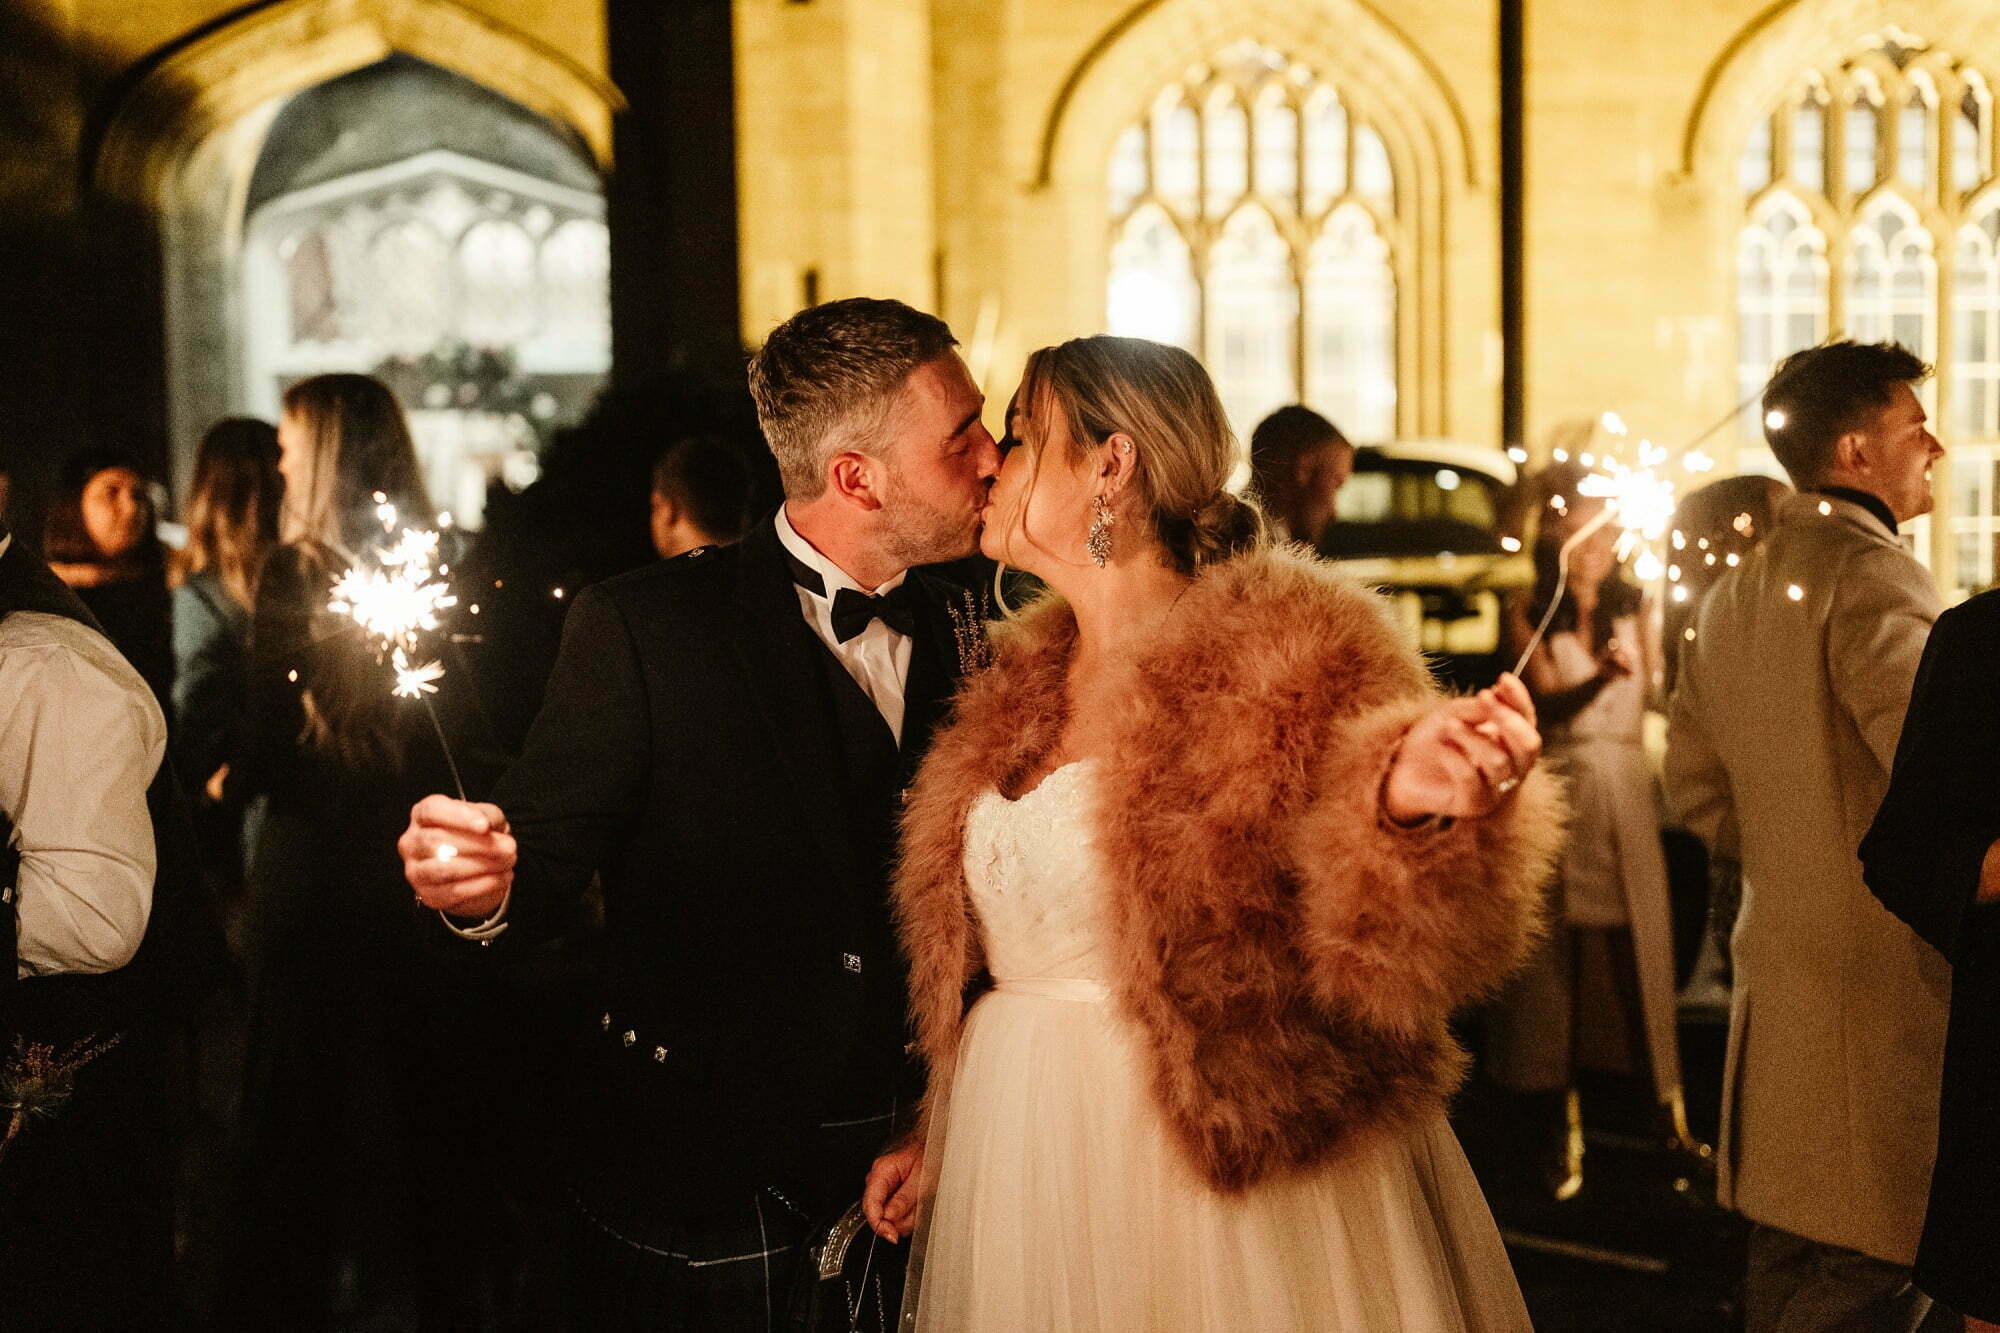 drumtochty castle wedding sparklers outside bride groom